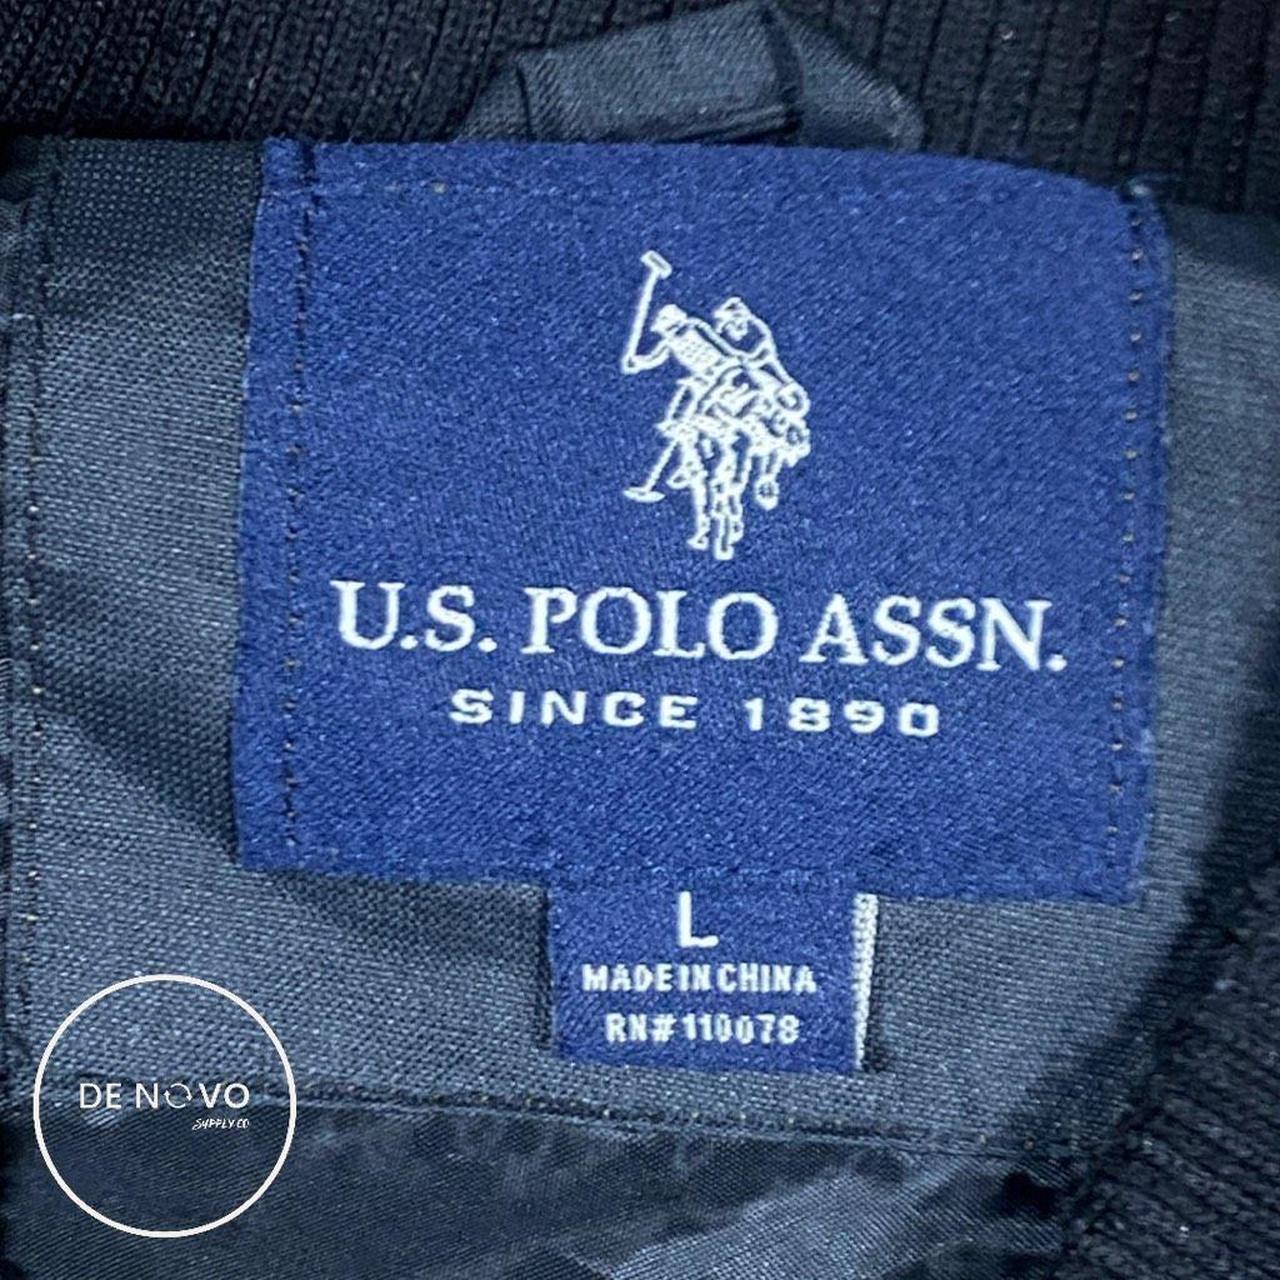 US POLO ASSN Underwear. - Depop